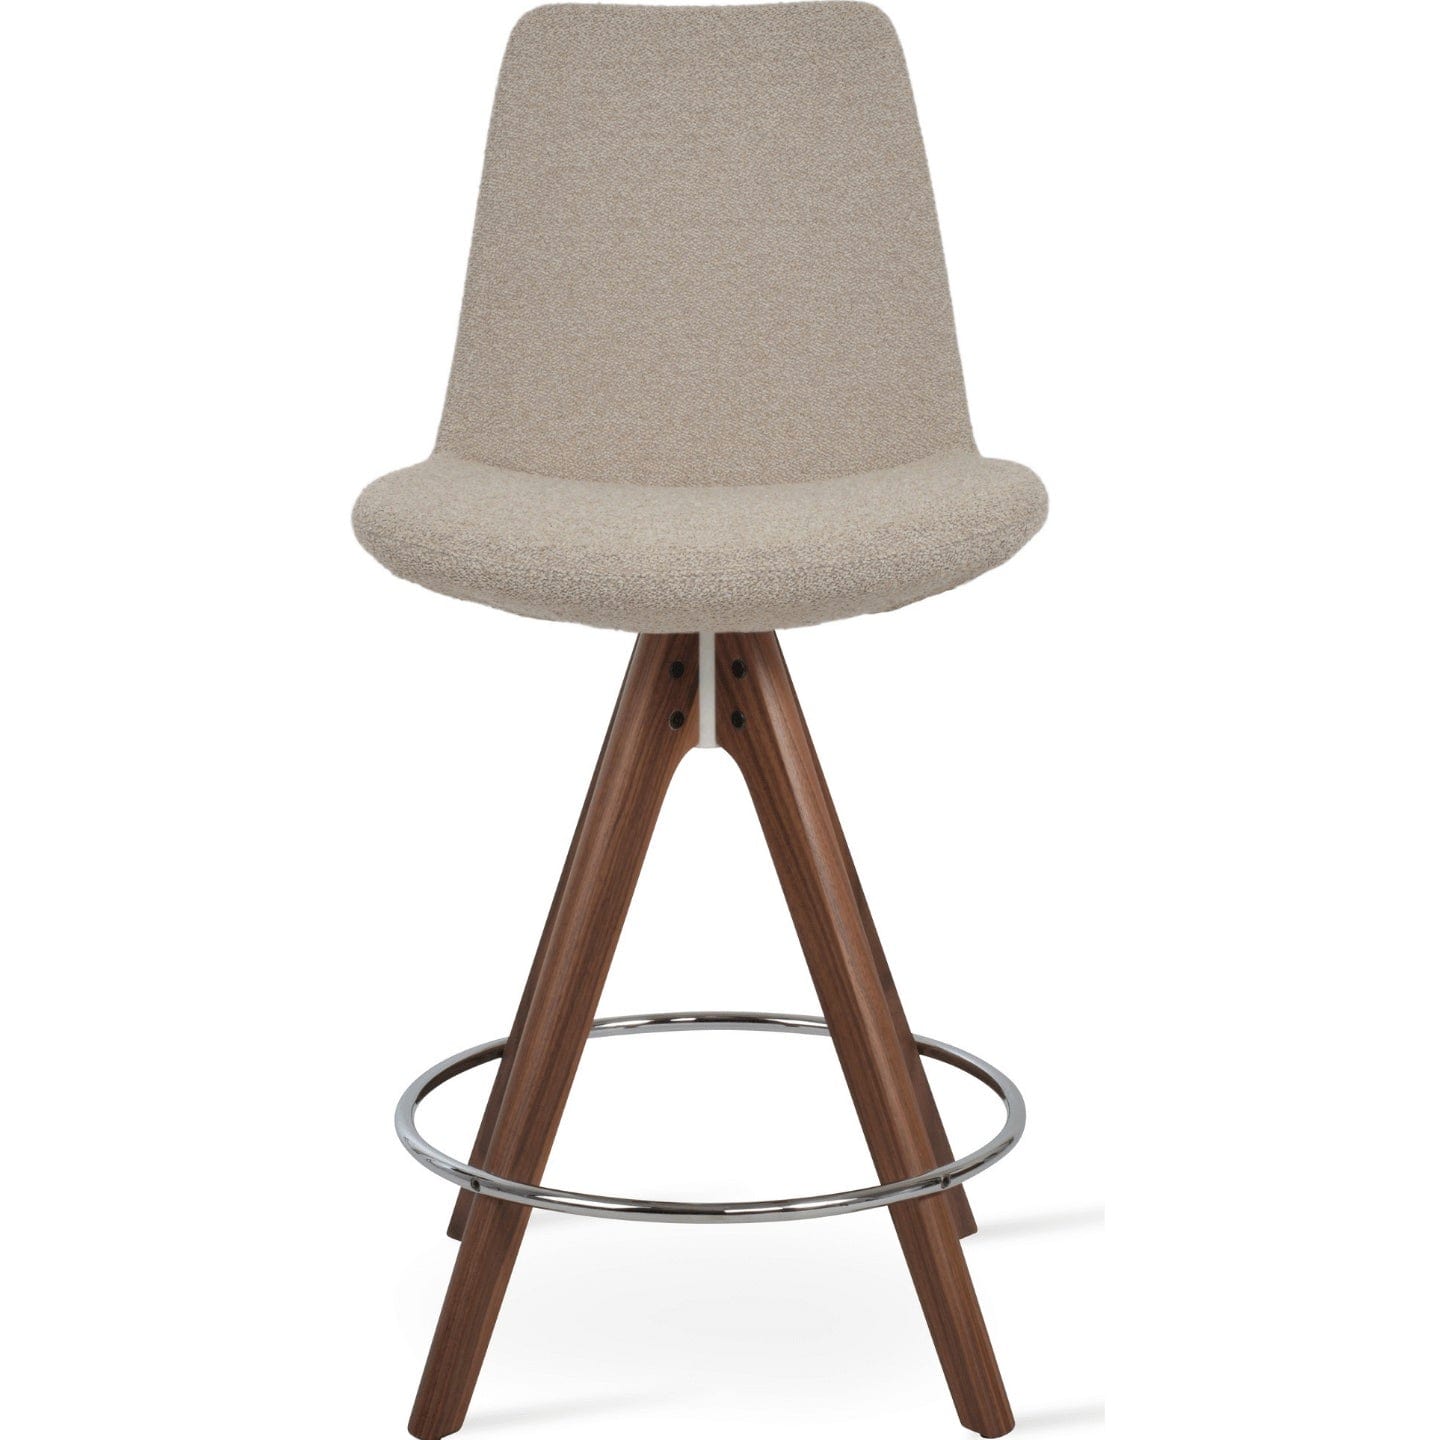 sohoConcept Table & Bar Stools Eiffel Chair Upholstered Boucle Seat | Pyramid Swivel Wood Base Barstools